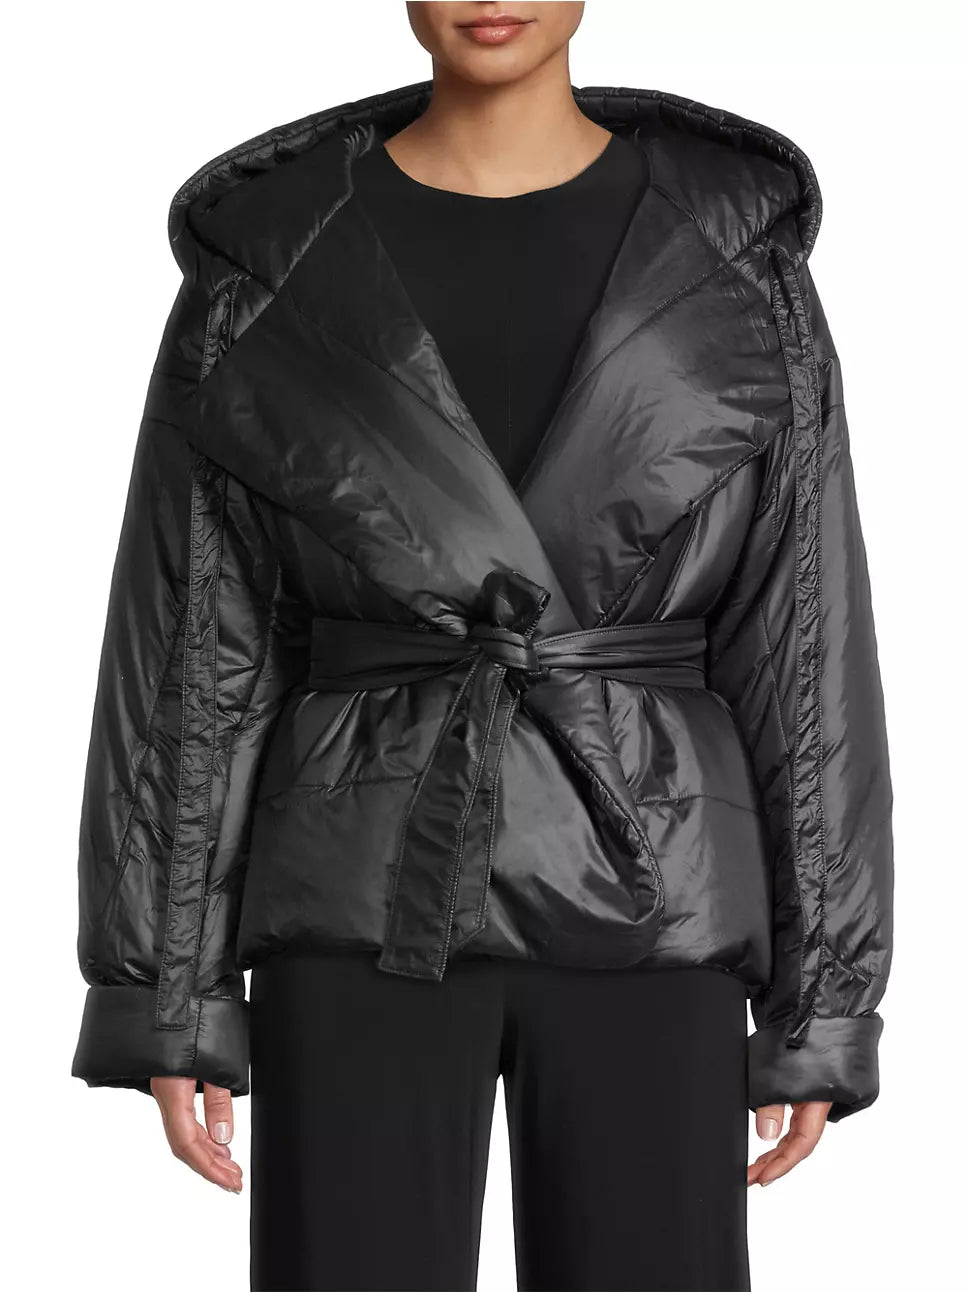 Norma Kamali Short Sleeping Bag Coat, puffer jacket, puffer, coat, outerwear, women's clothing